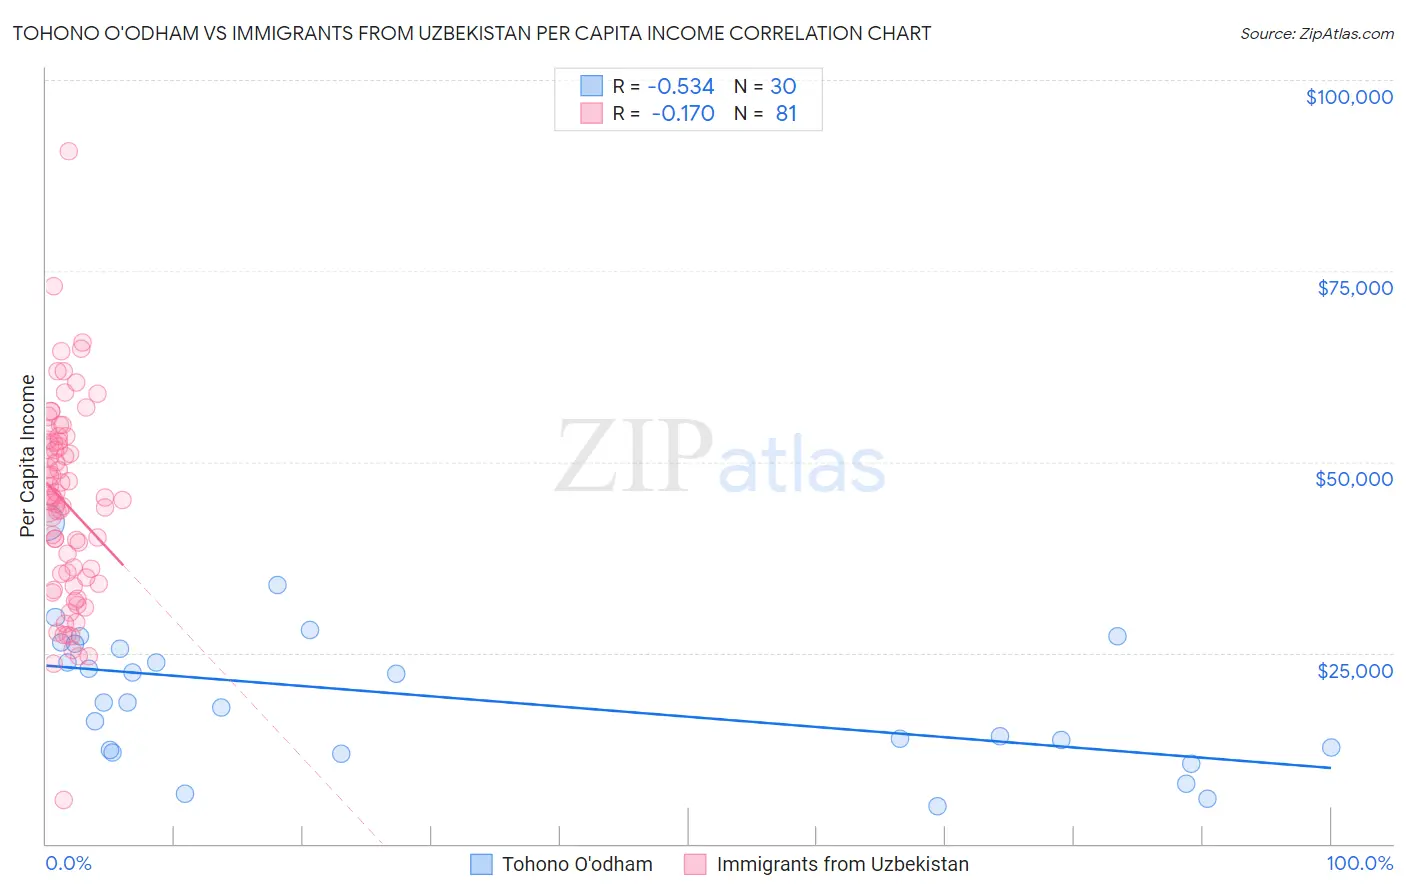 Tohono O'odham vs Immigrants from Uzbekistan Per Capita Income